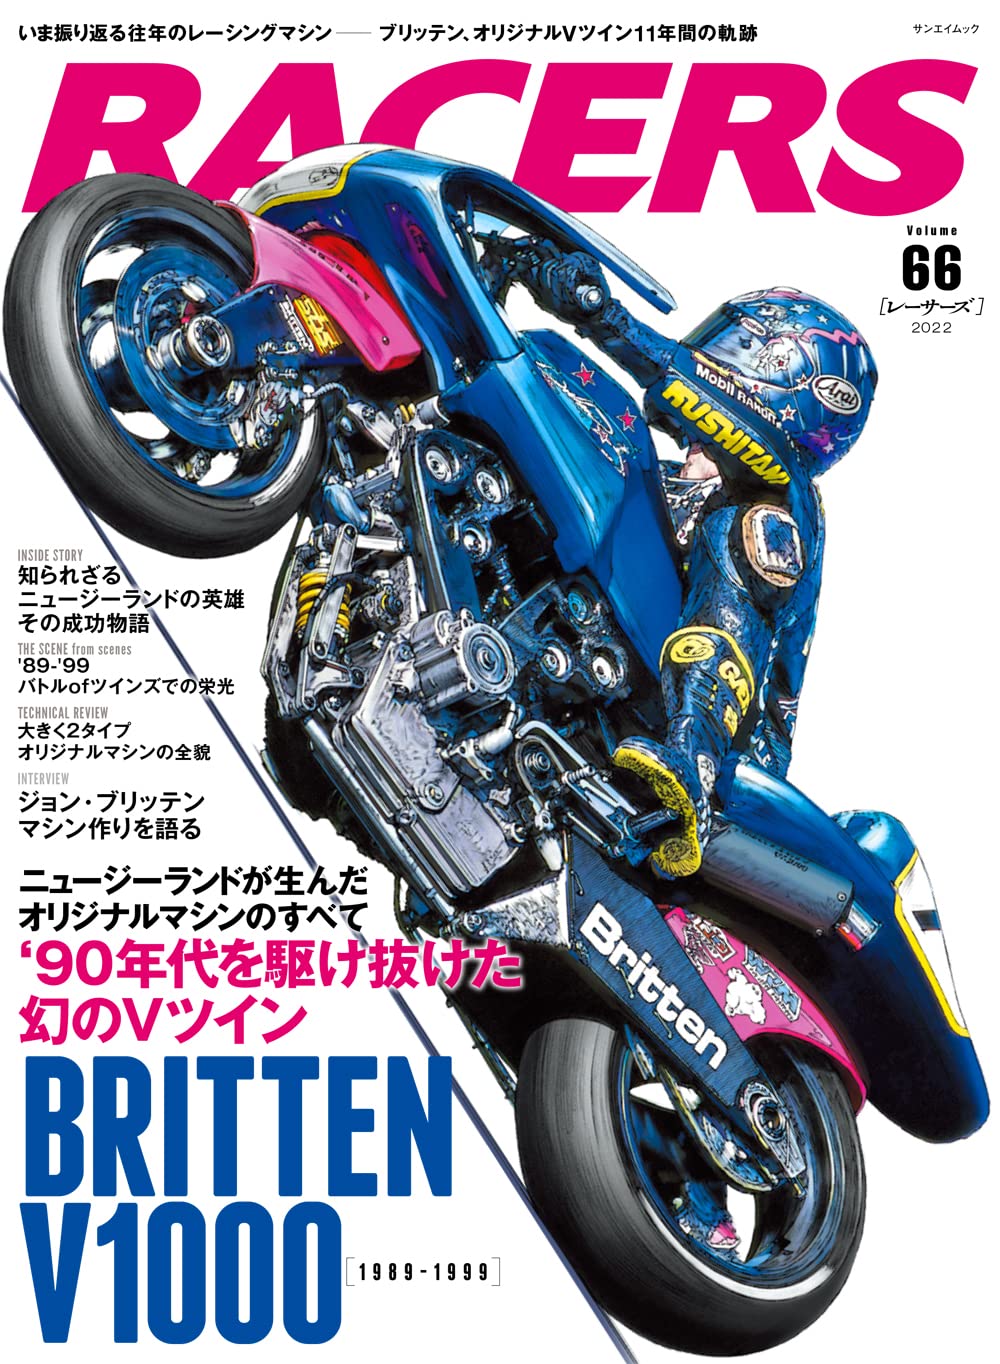 RACERS - レ-サ-ズ - Vol.66 BRITTEN V1000/1100 (サンエイムック)